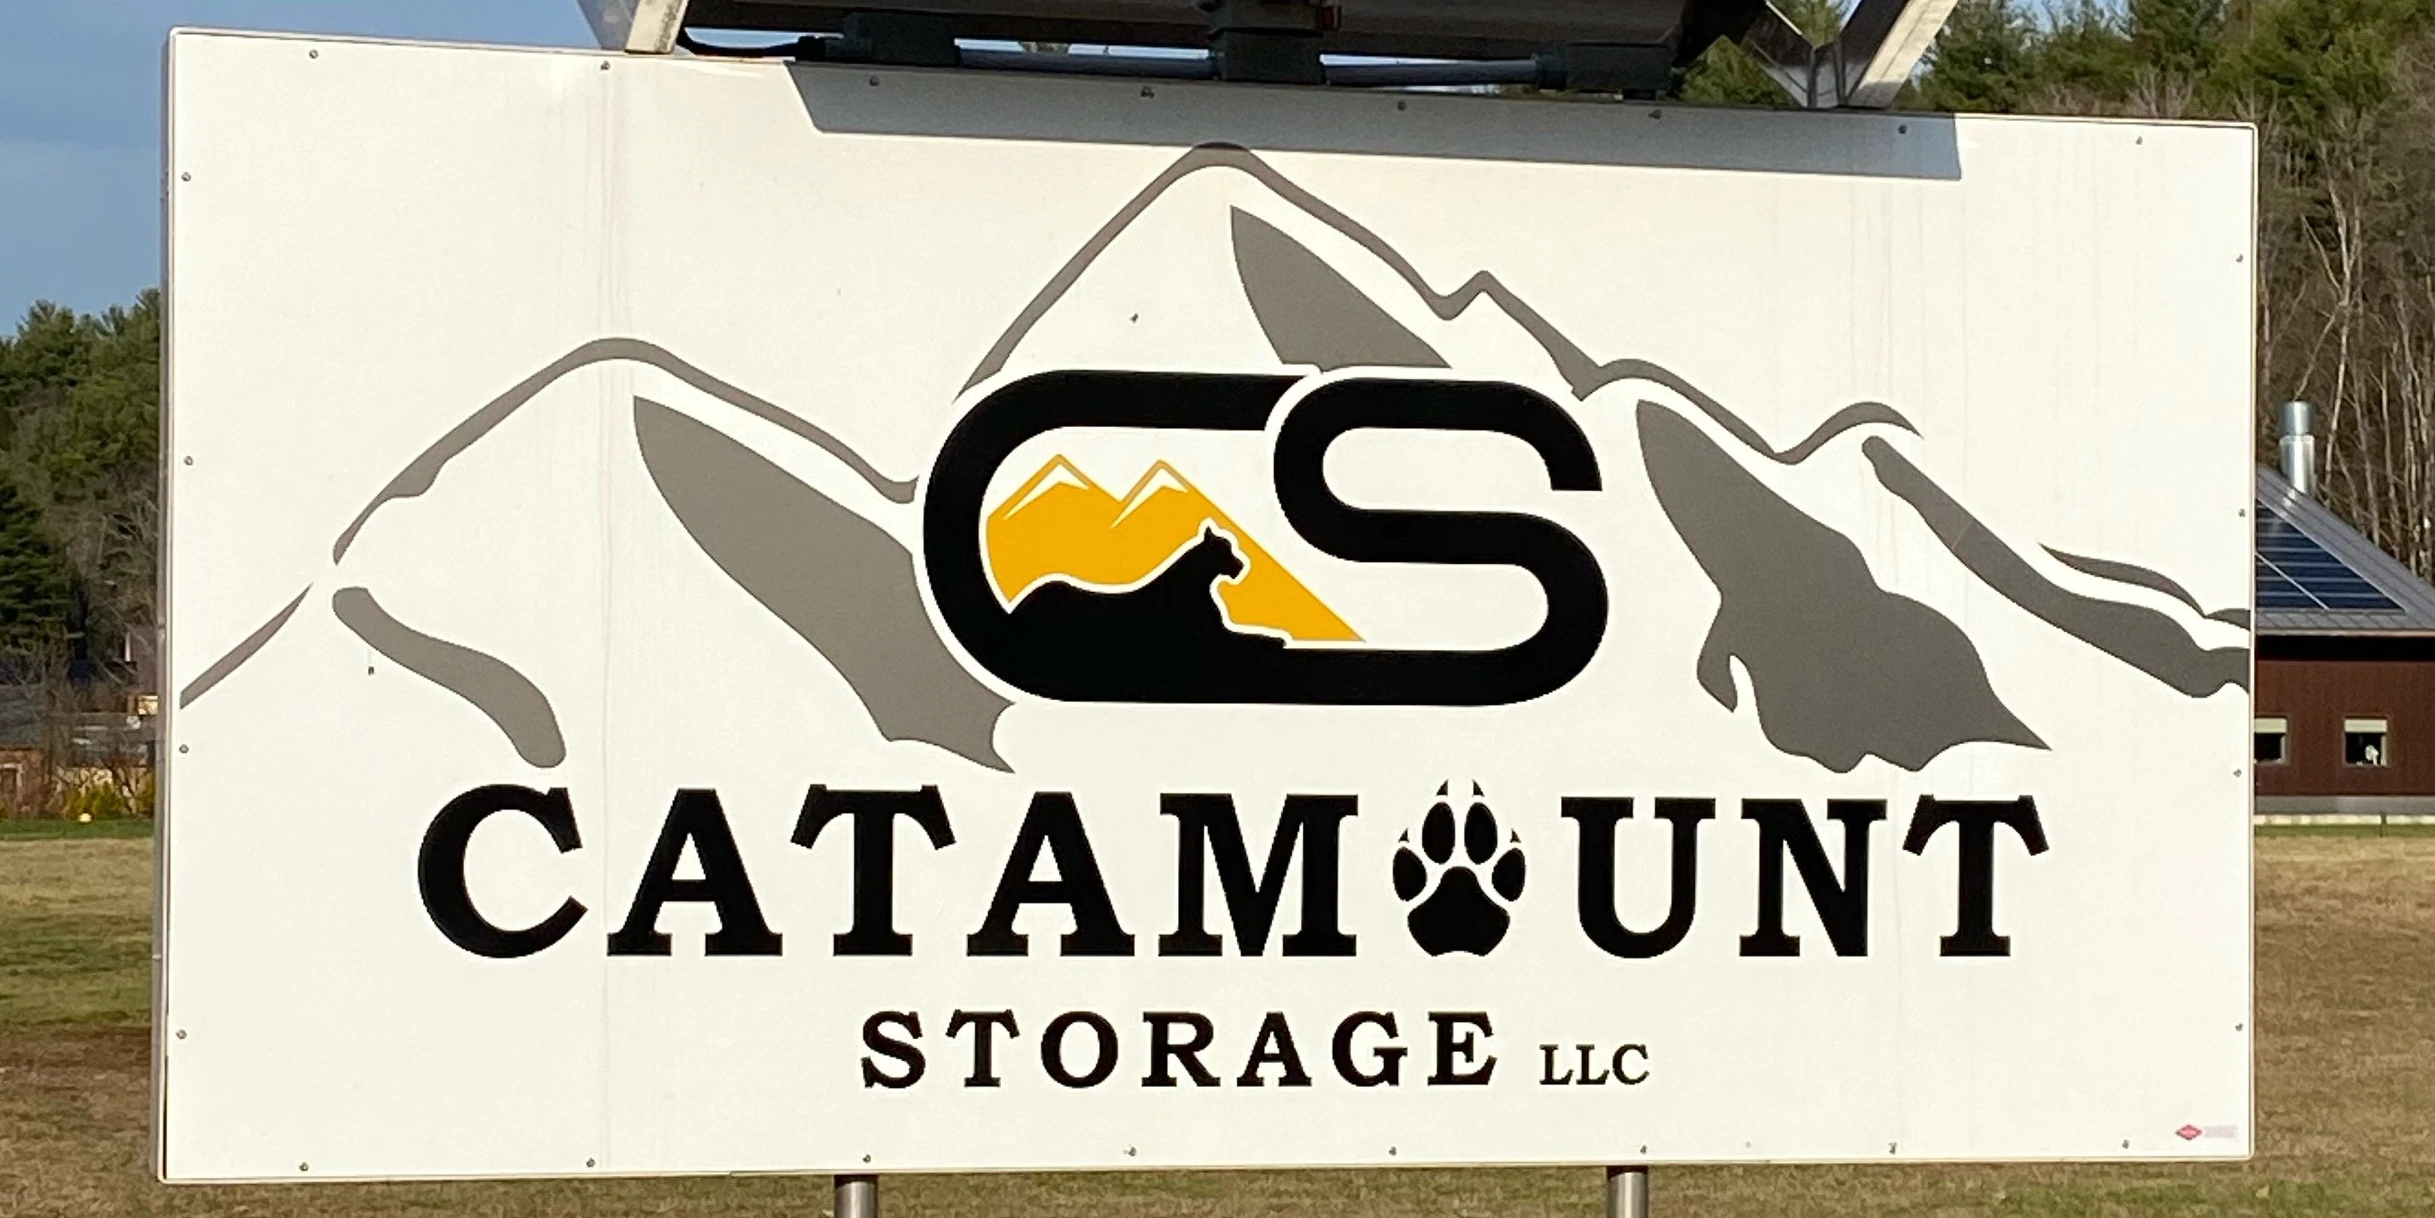 Catamount Storage, LLC Sign